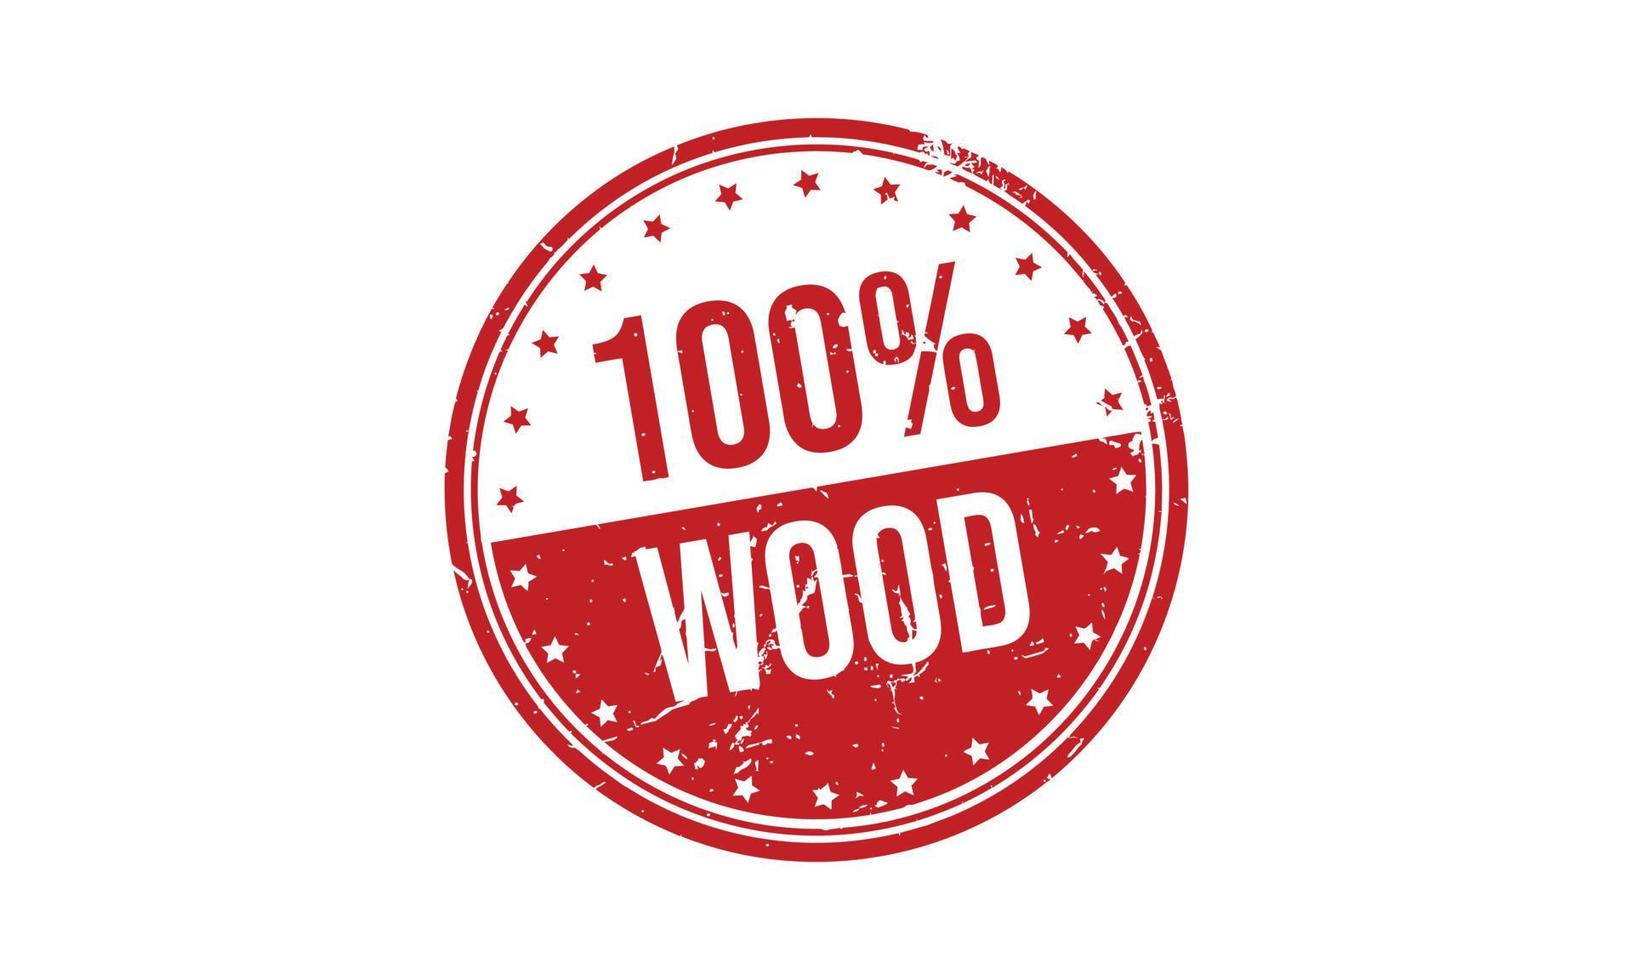 100 Prozent Holz Gummi Briefmarke vektor